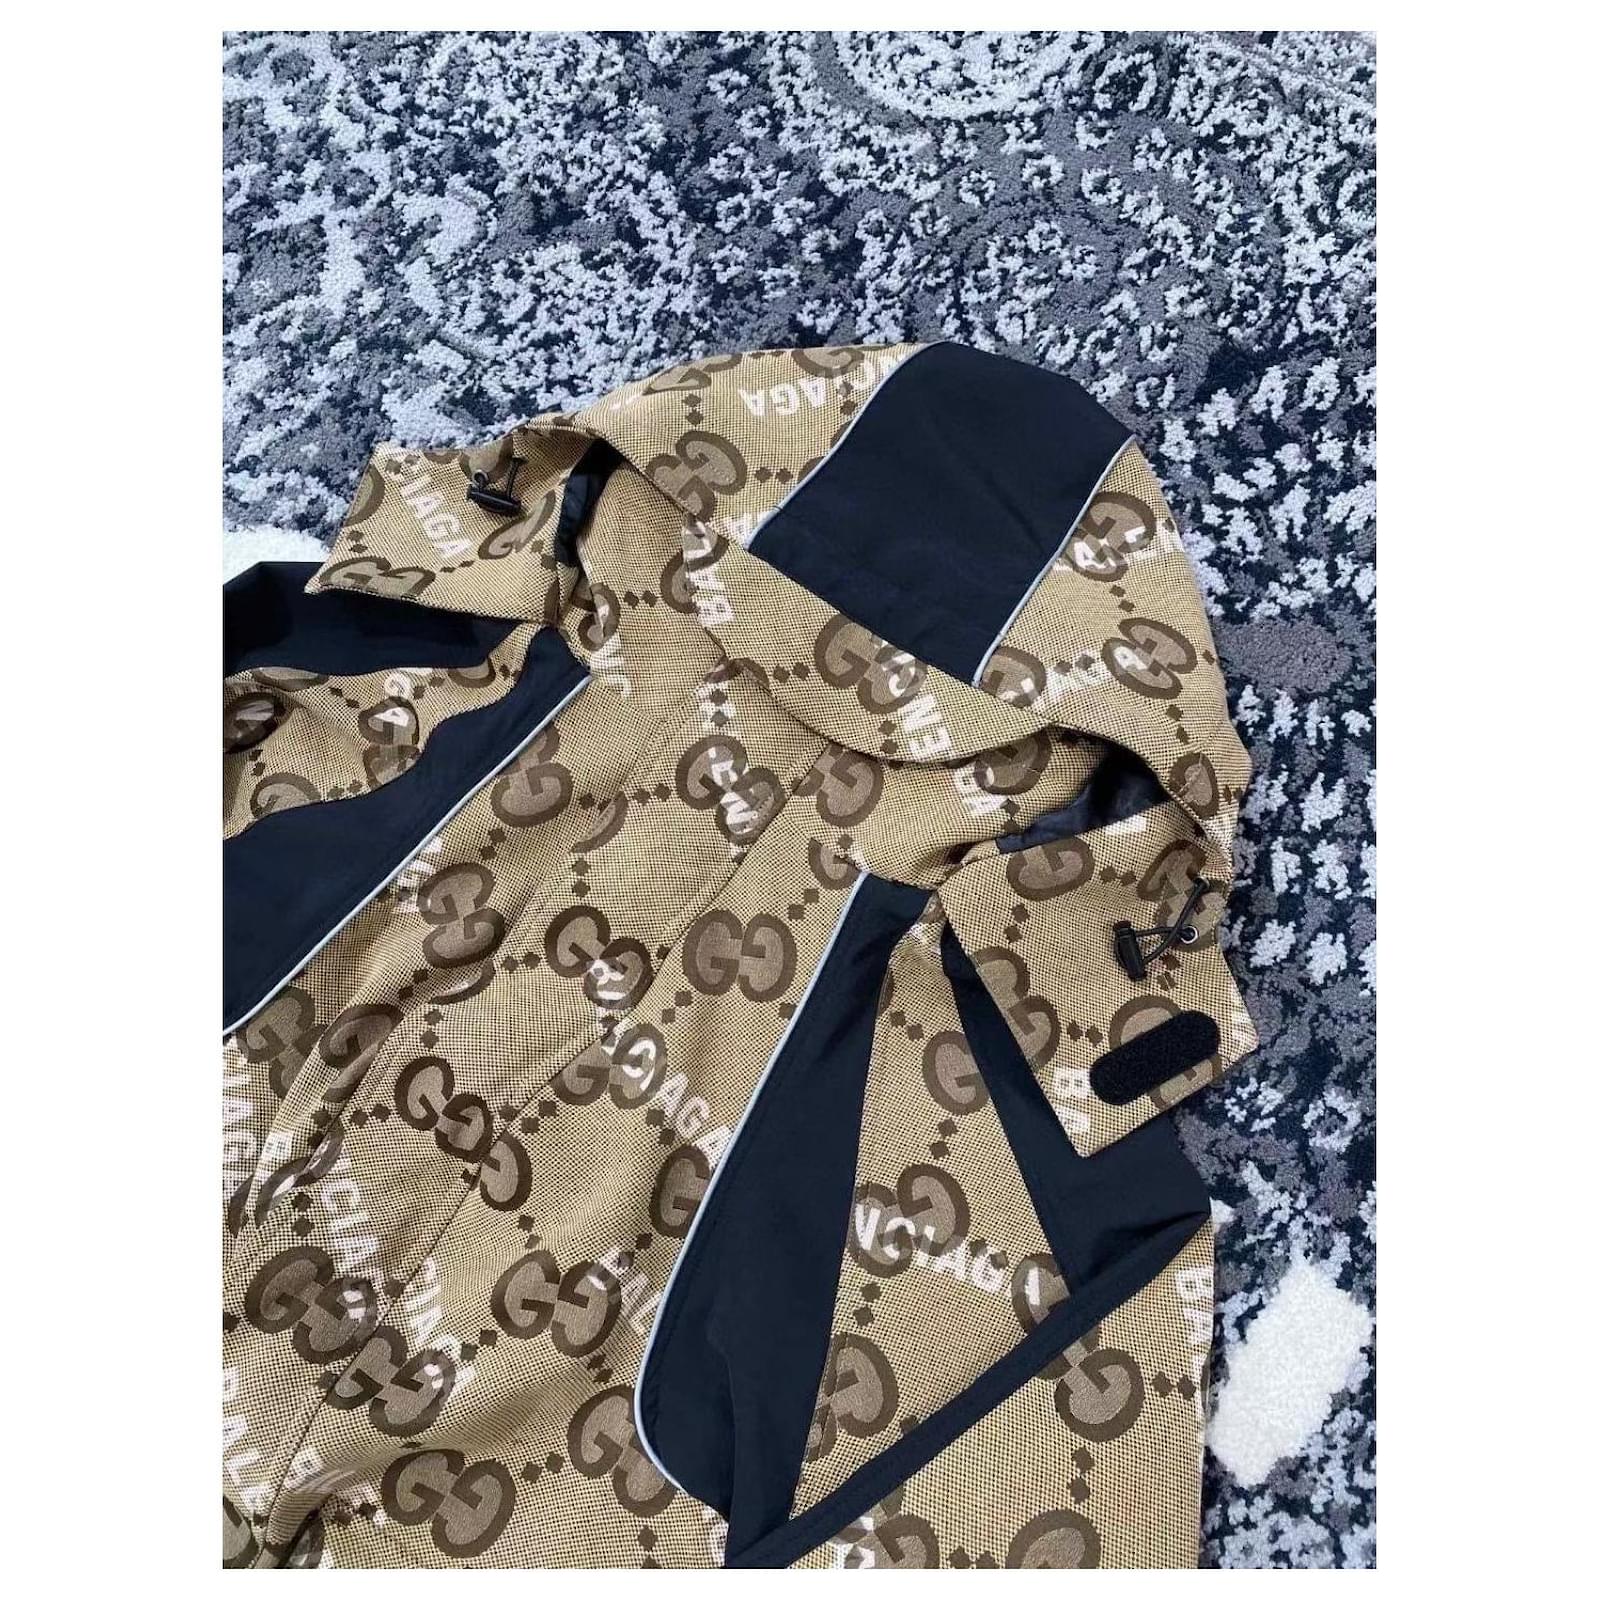 Gucci x Balenciaga The Hacker Project Puffer Jacket